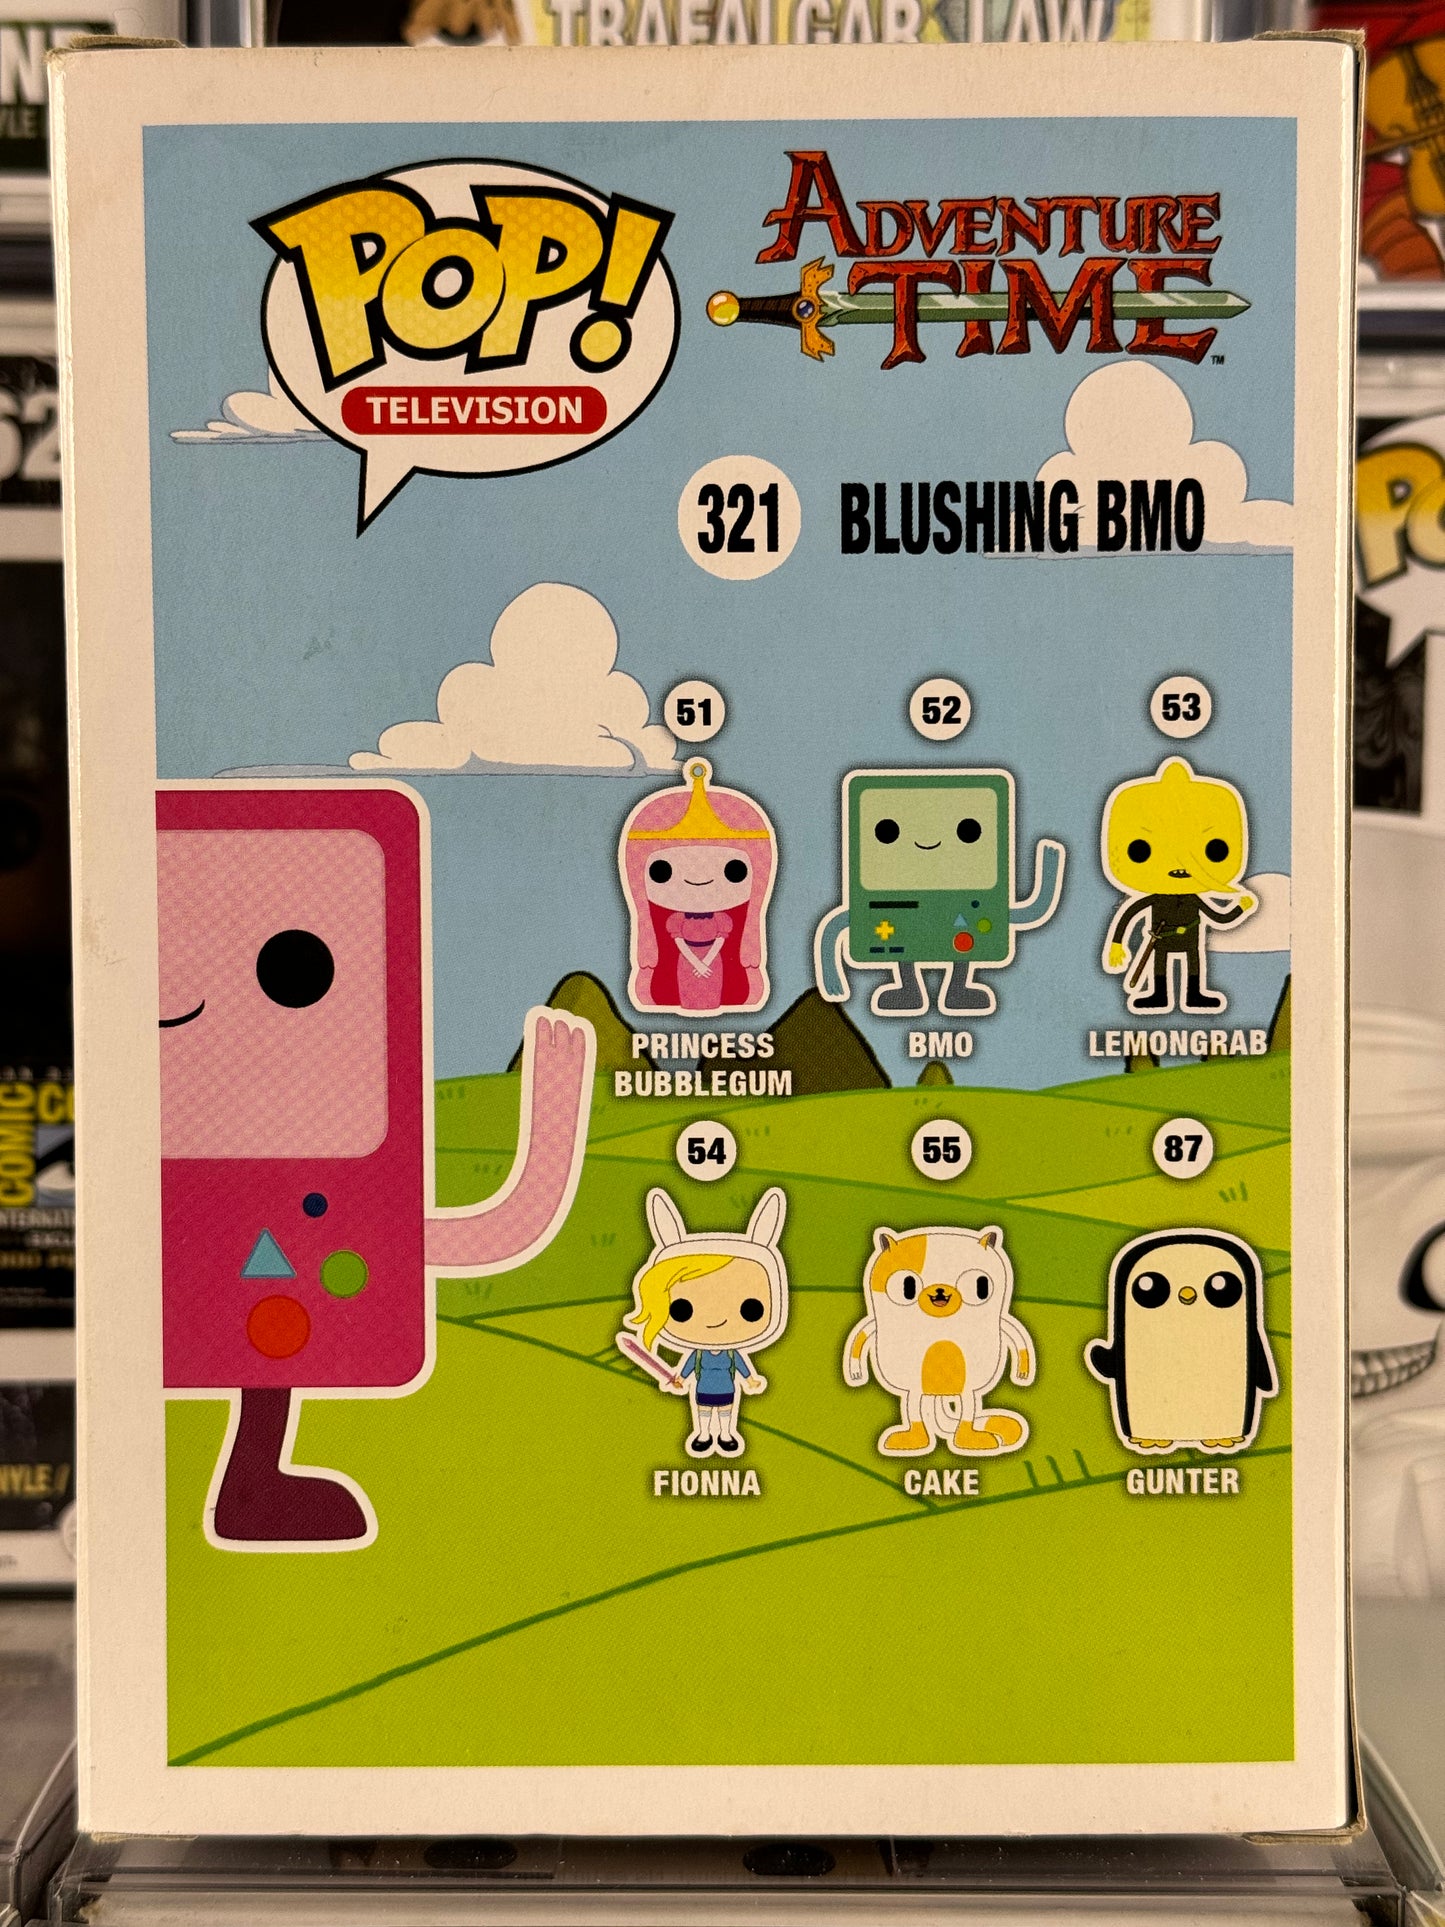 Adventure Time - Blushing BMO (321) Vaulted